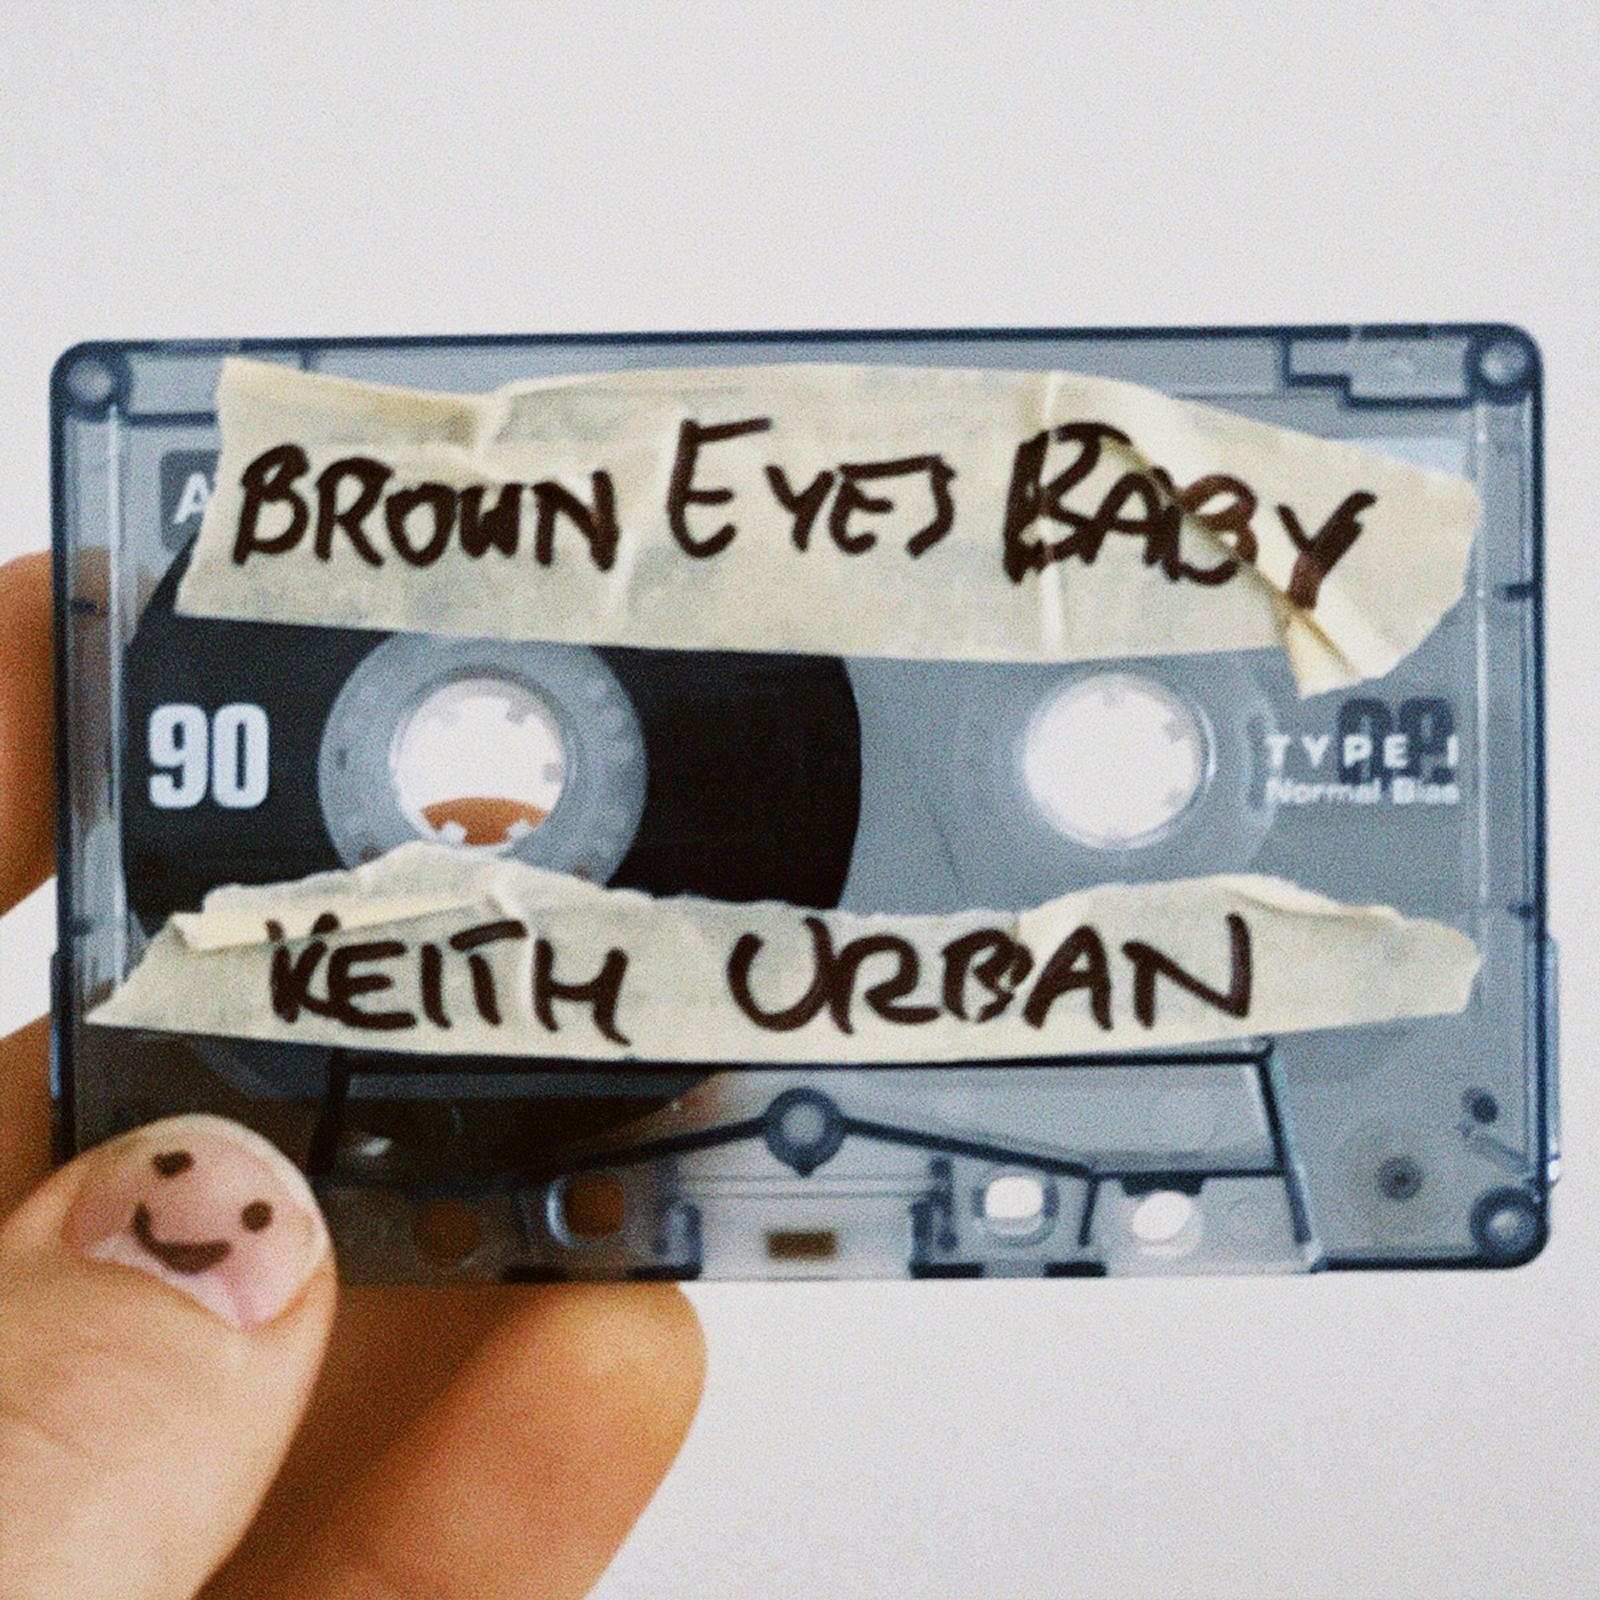 Keith Urban — Brown Eyes Baby cover artwork